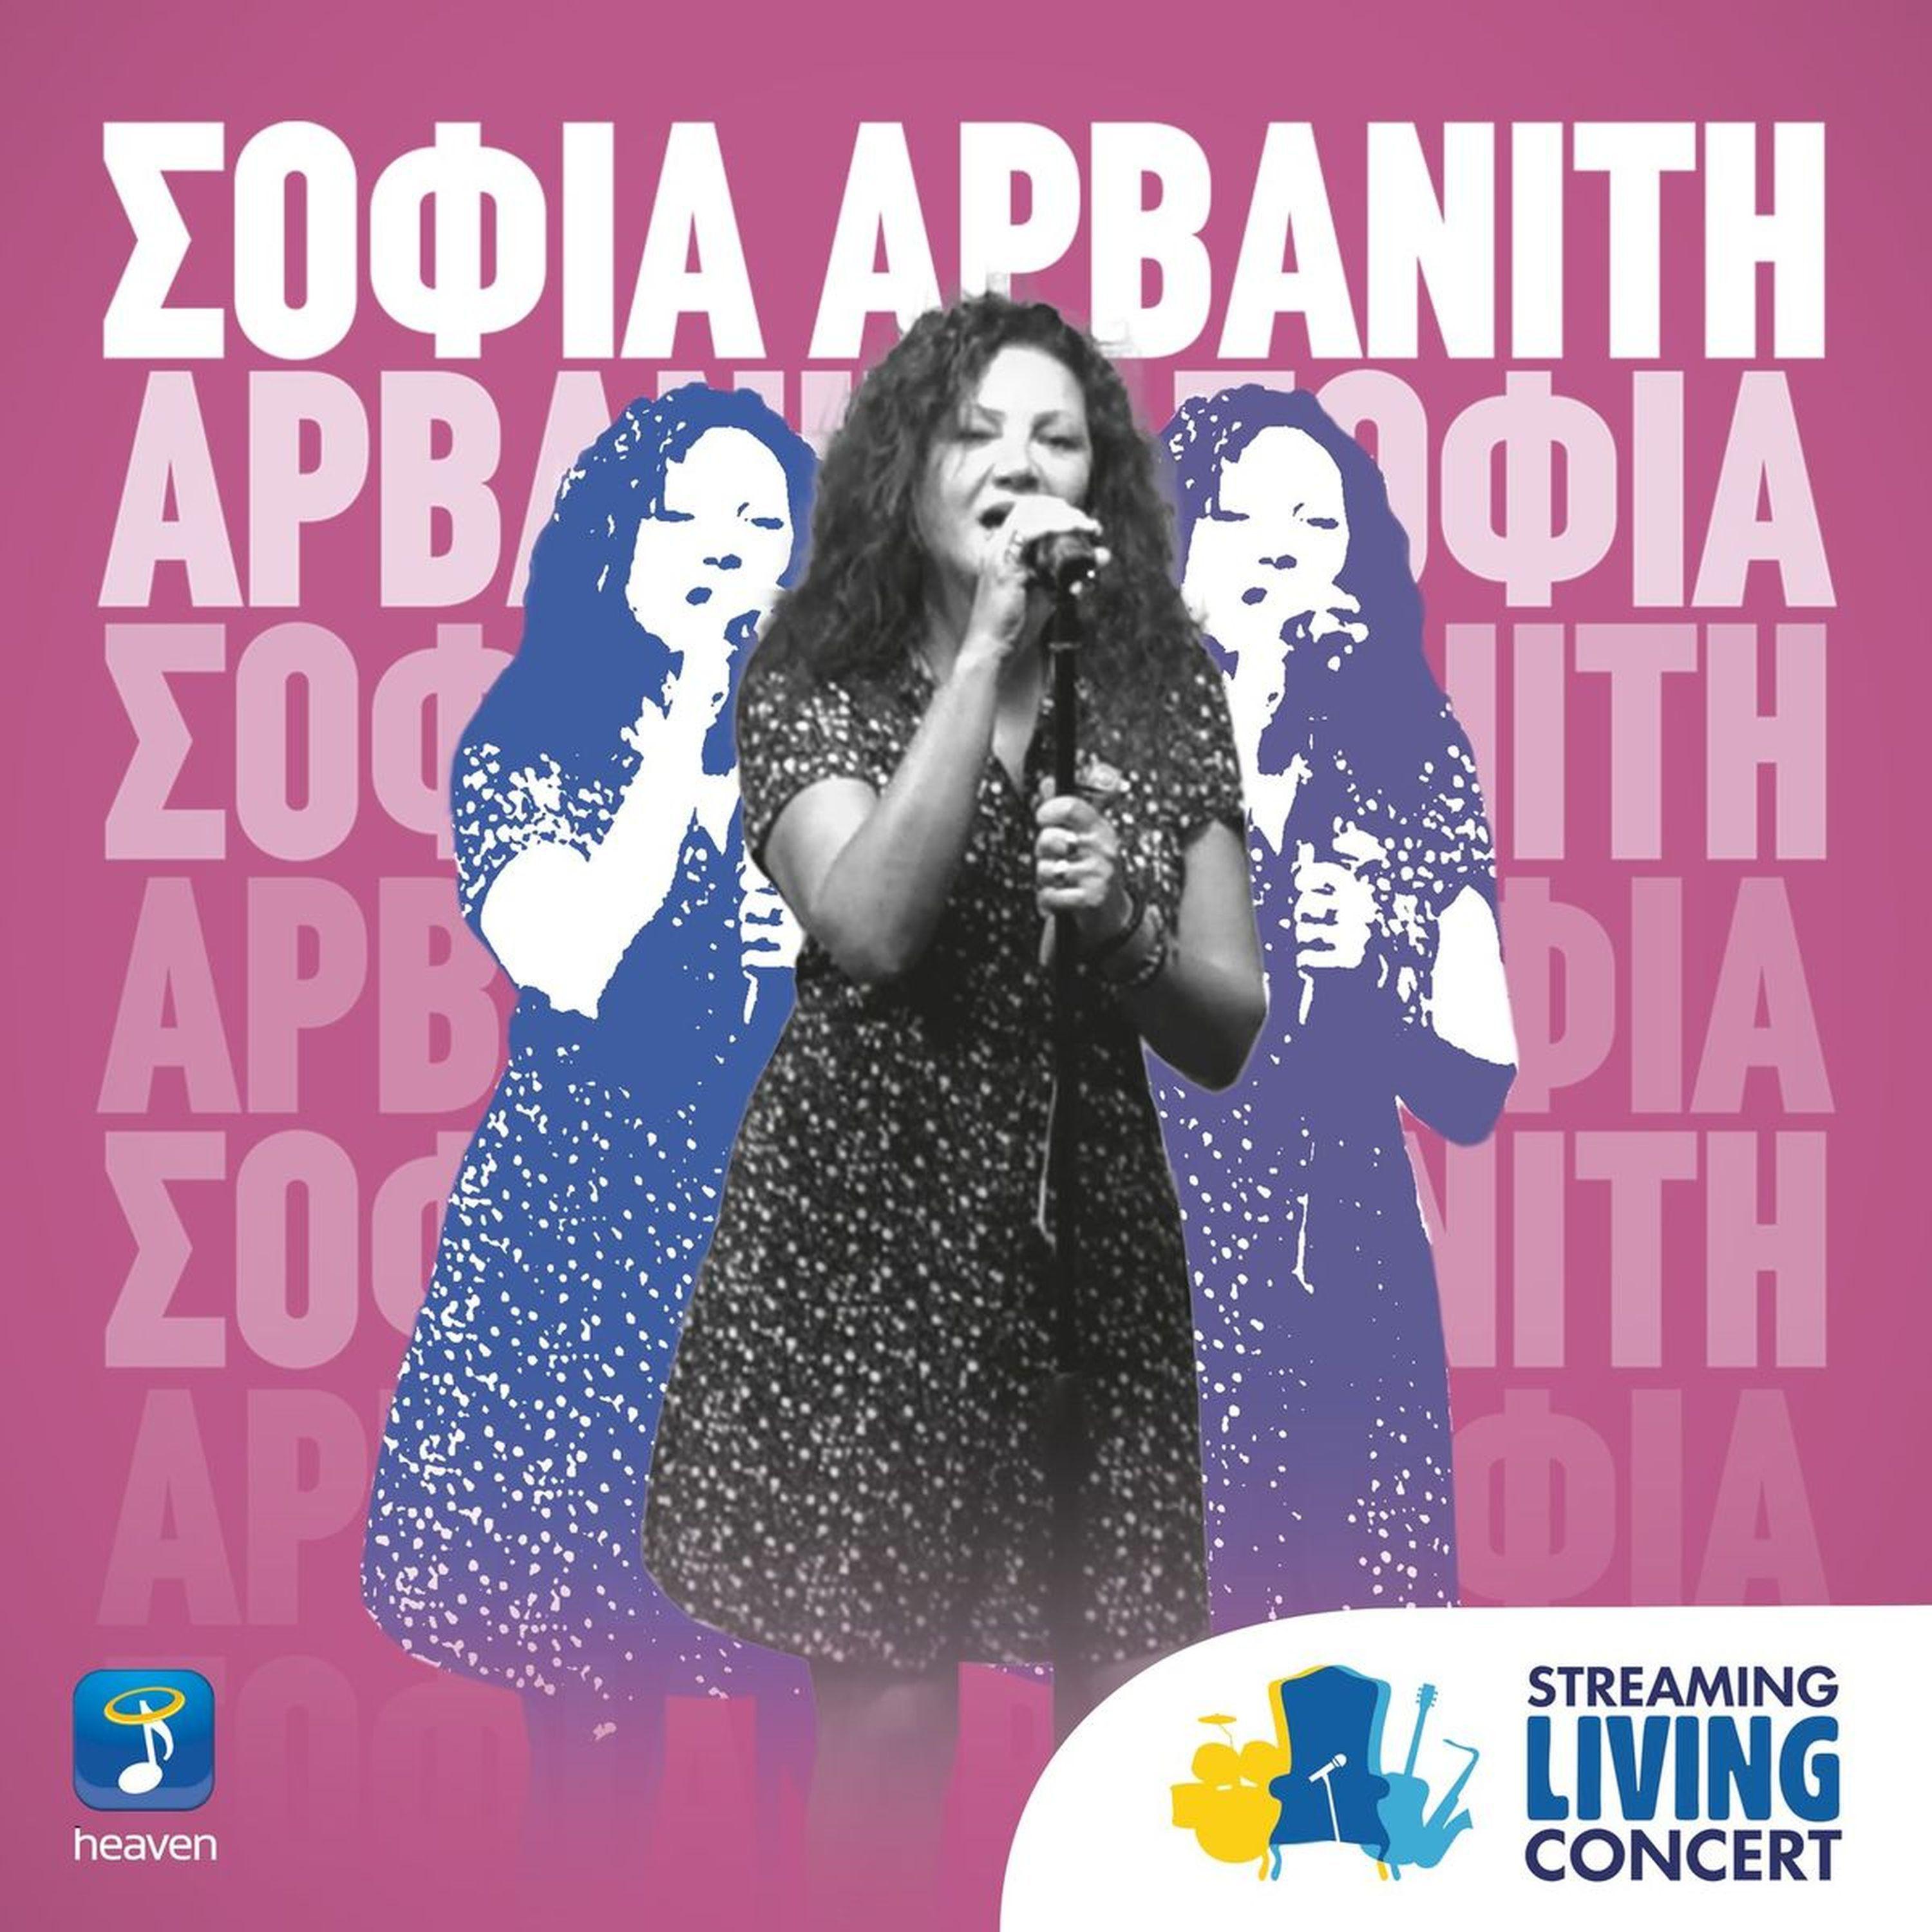 Sofia Arvaniti - I Palioskilou (Streaming Living Concert)